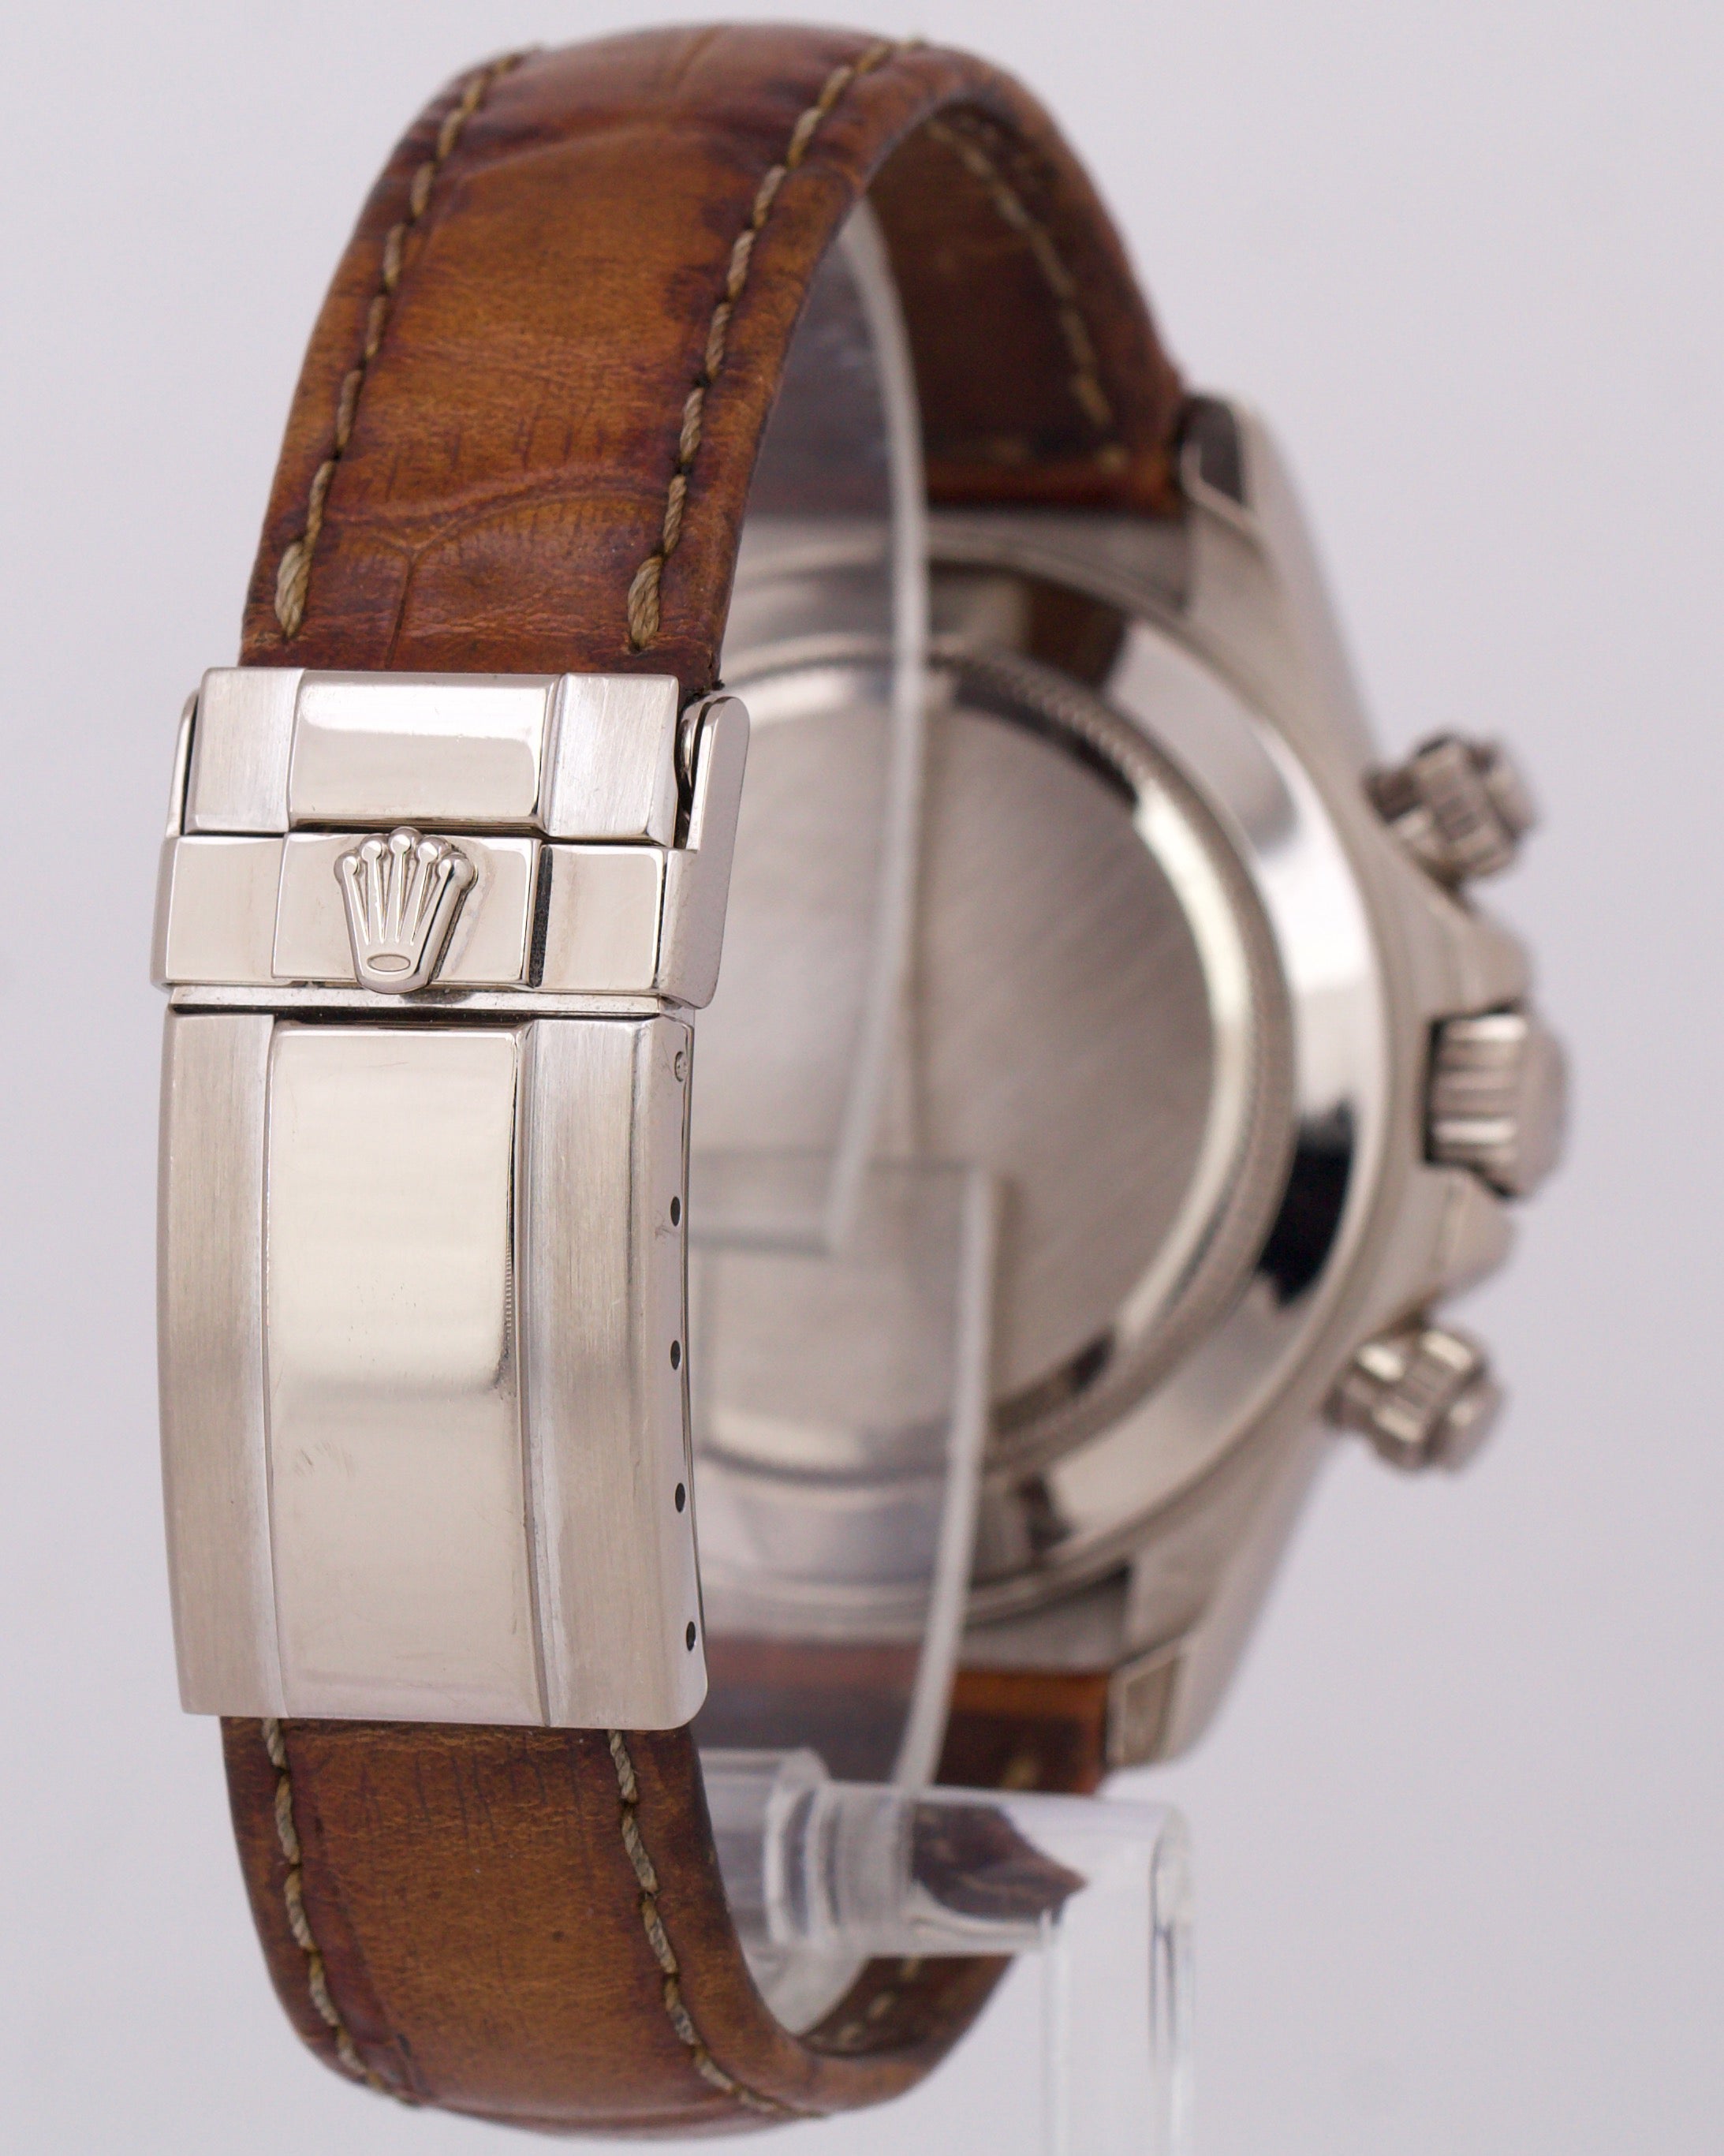 Rolex Daytona Cosmograph WHITE ARABIC 18K White Gold Brown Leather Watch 116519